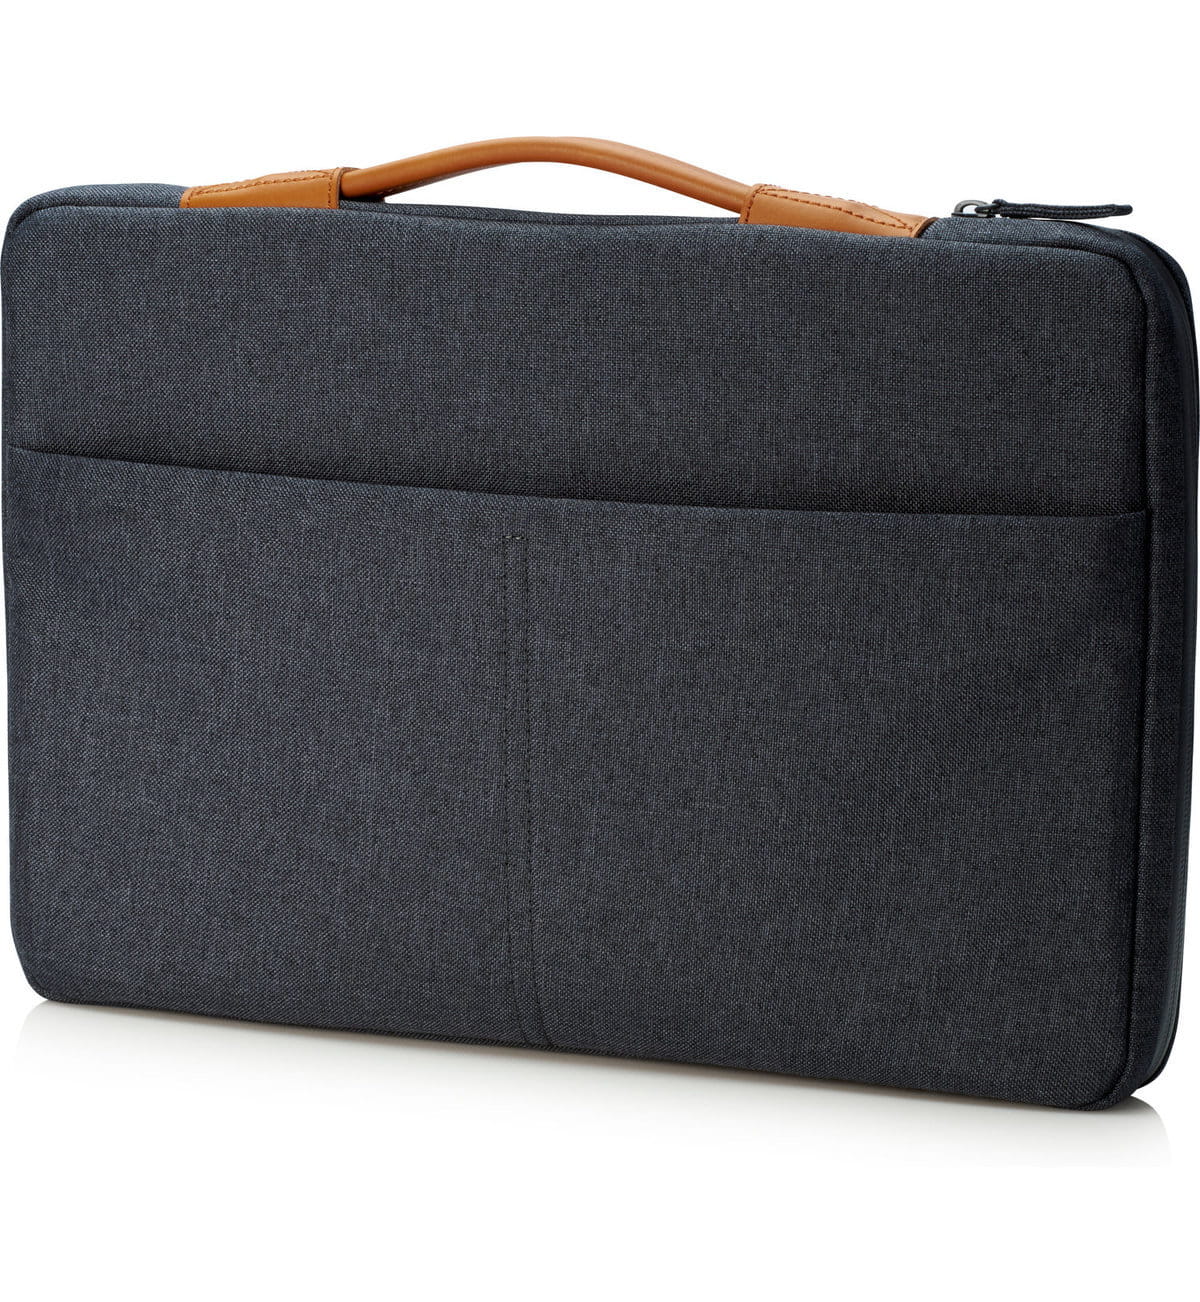 Bag HP ENVY Urban 15.6 / Sleeve / 3KJ70AA#ABB /